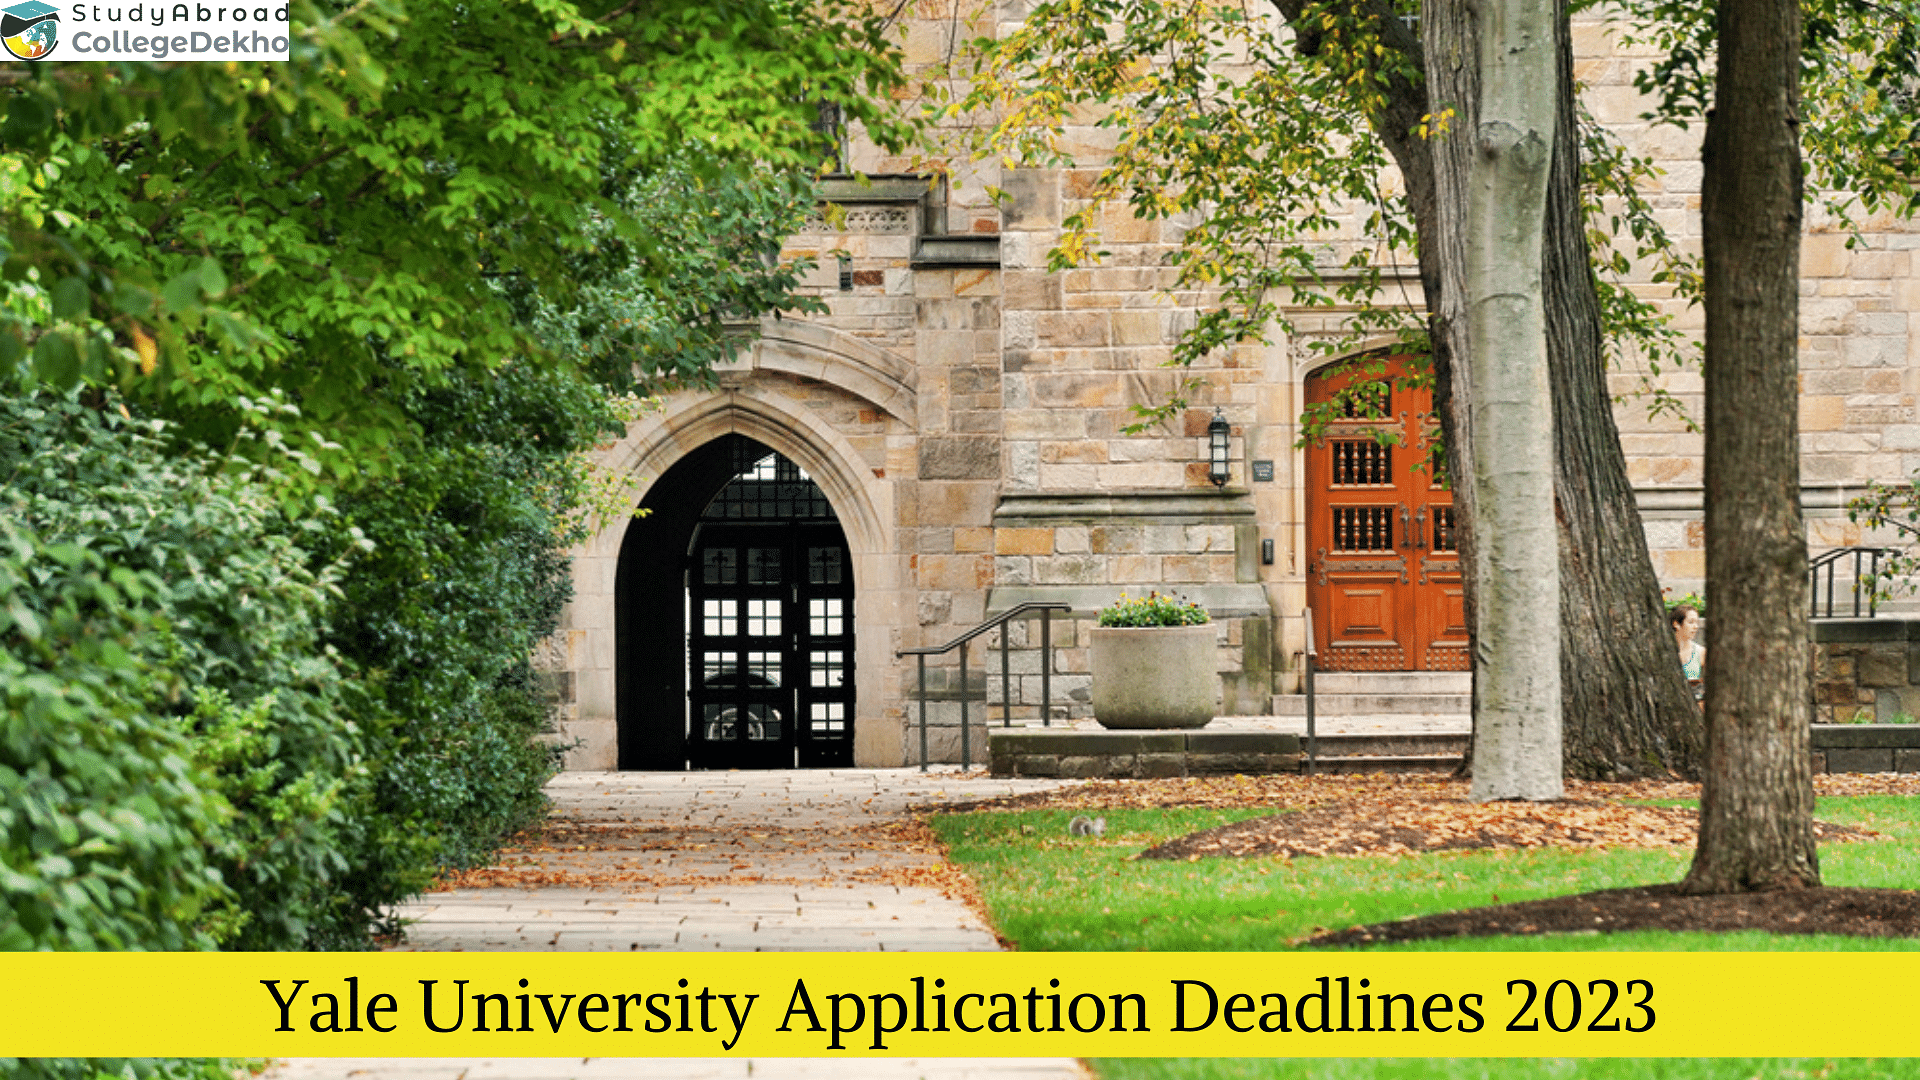 Yale University Application Deadlines 2023